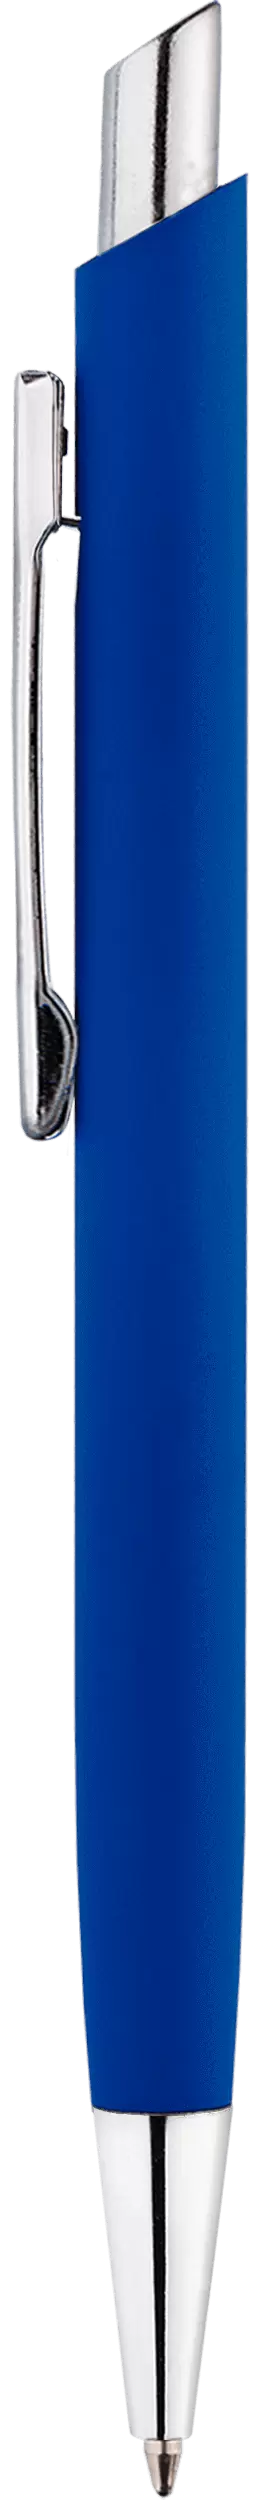 Ручка ELFARO SOFT Синяя 3053-01